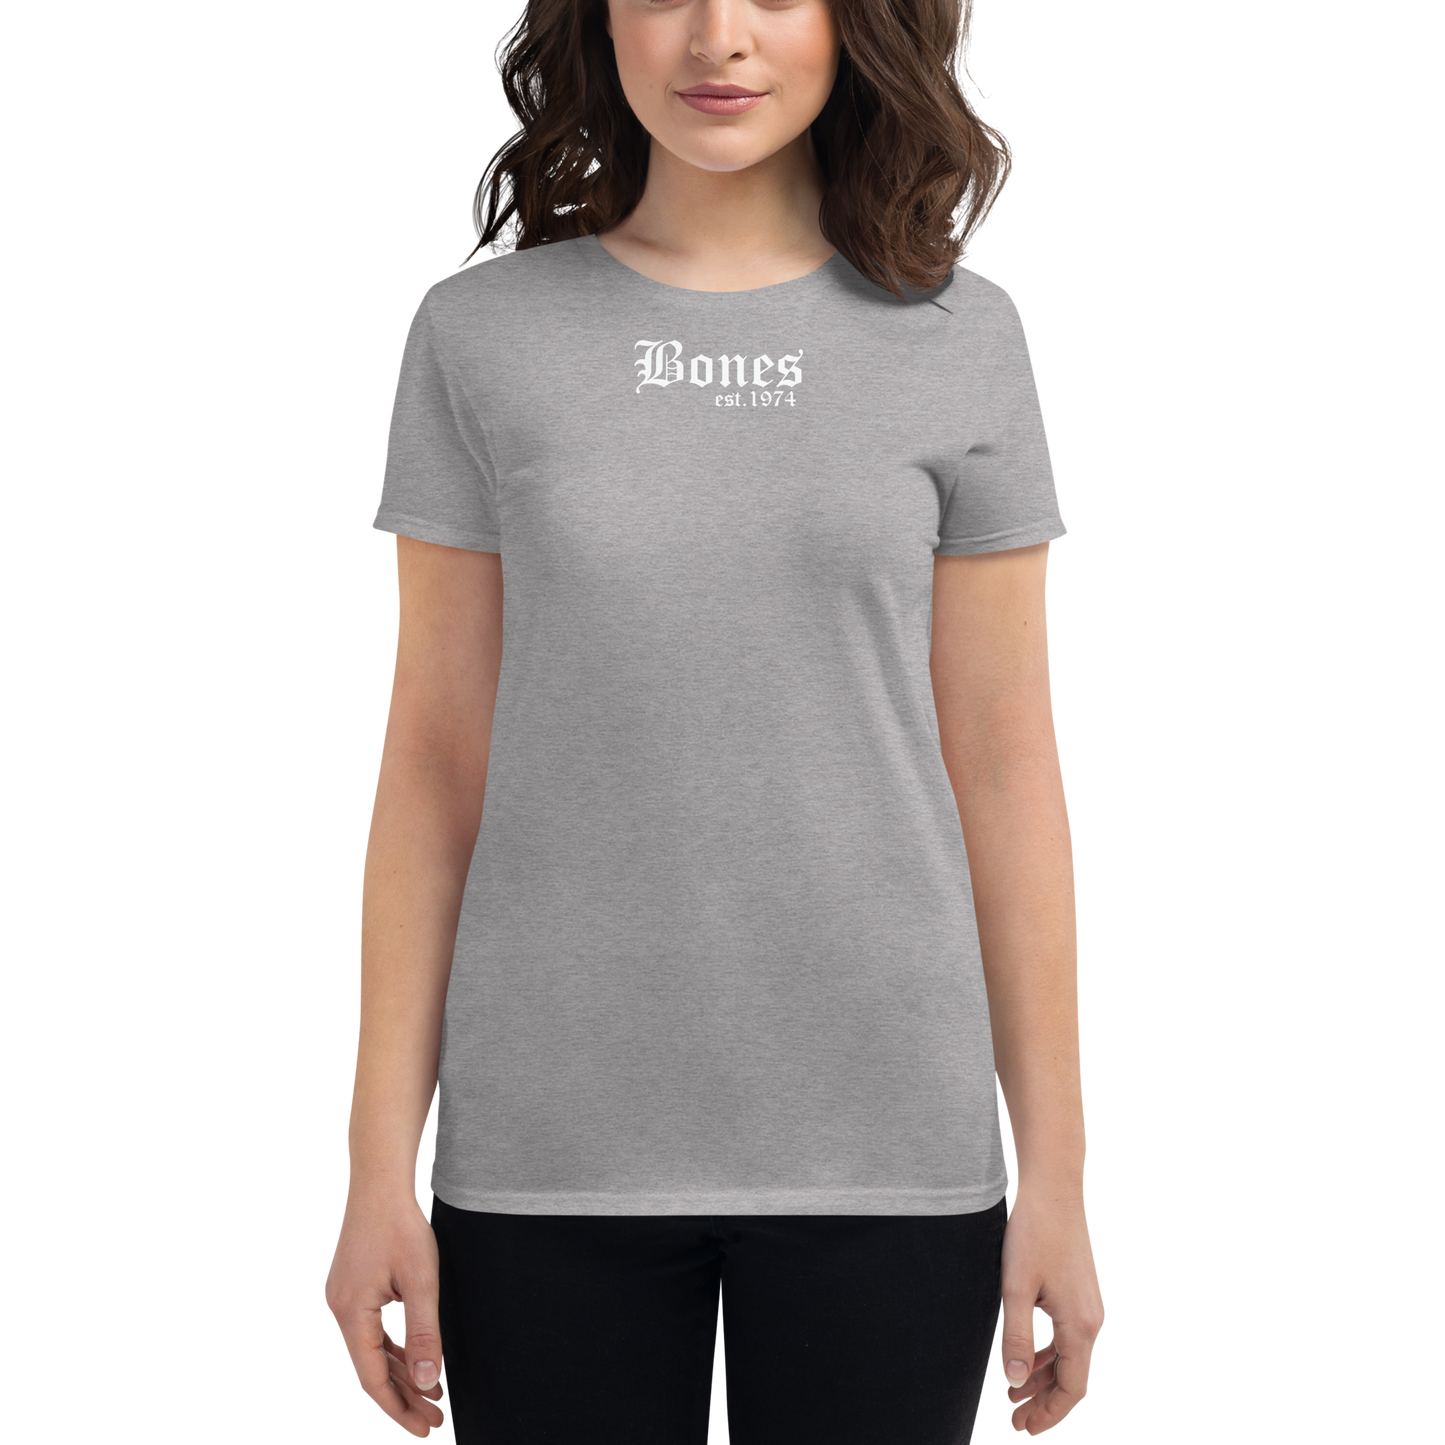 Women's old English "BONES" short sleeve t-shirt